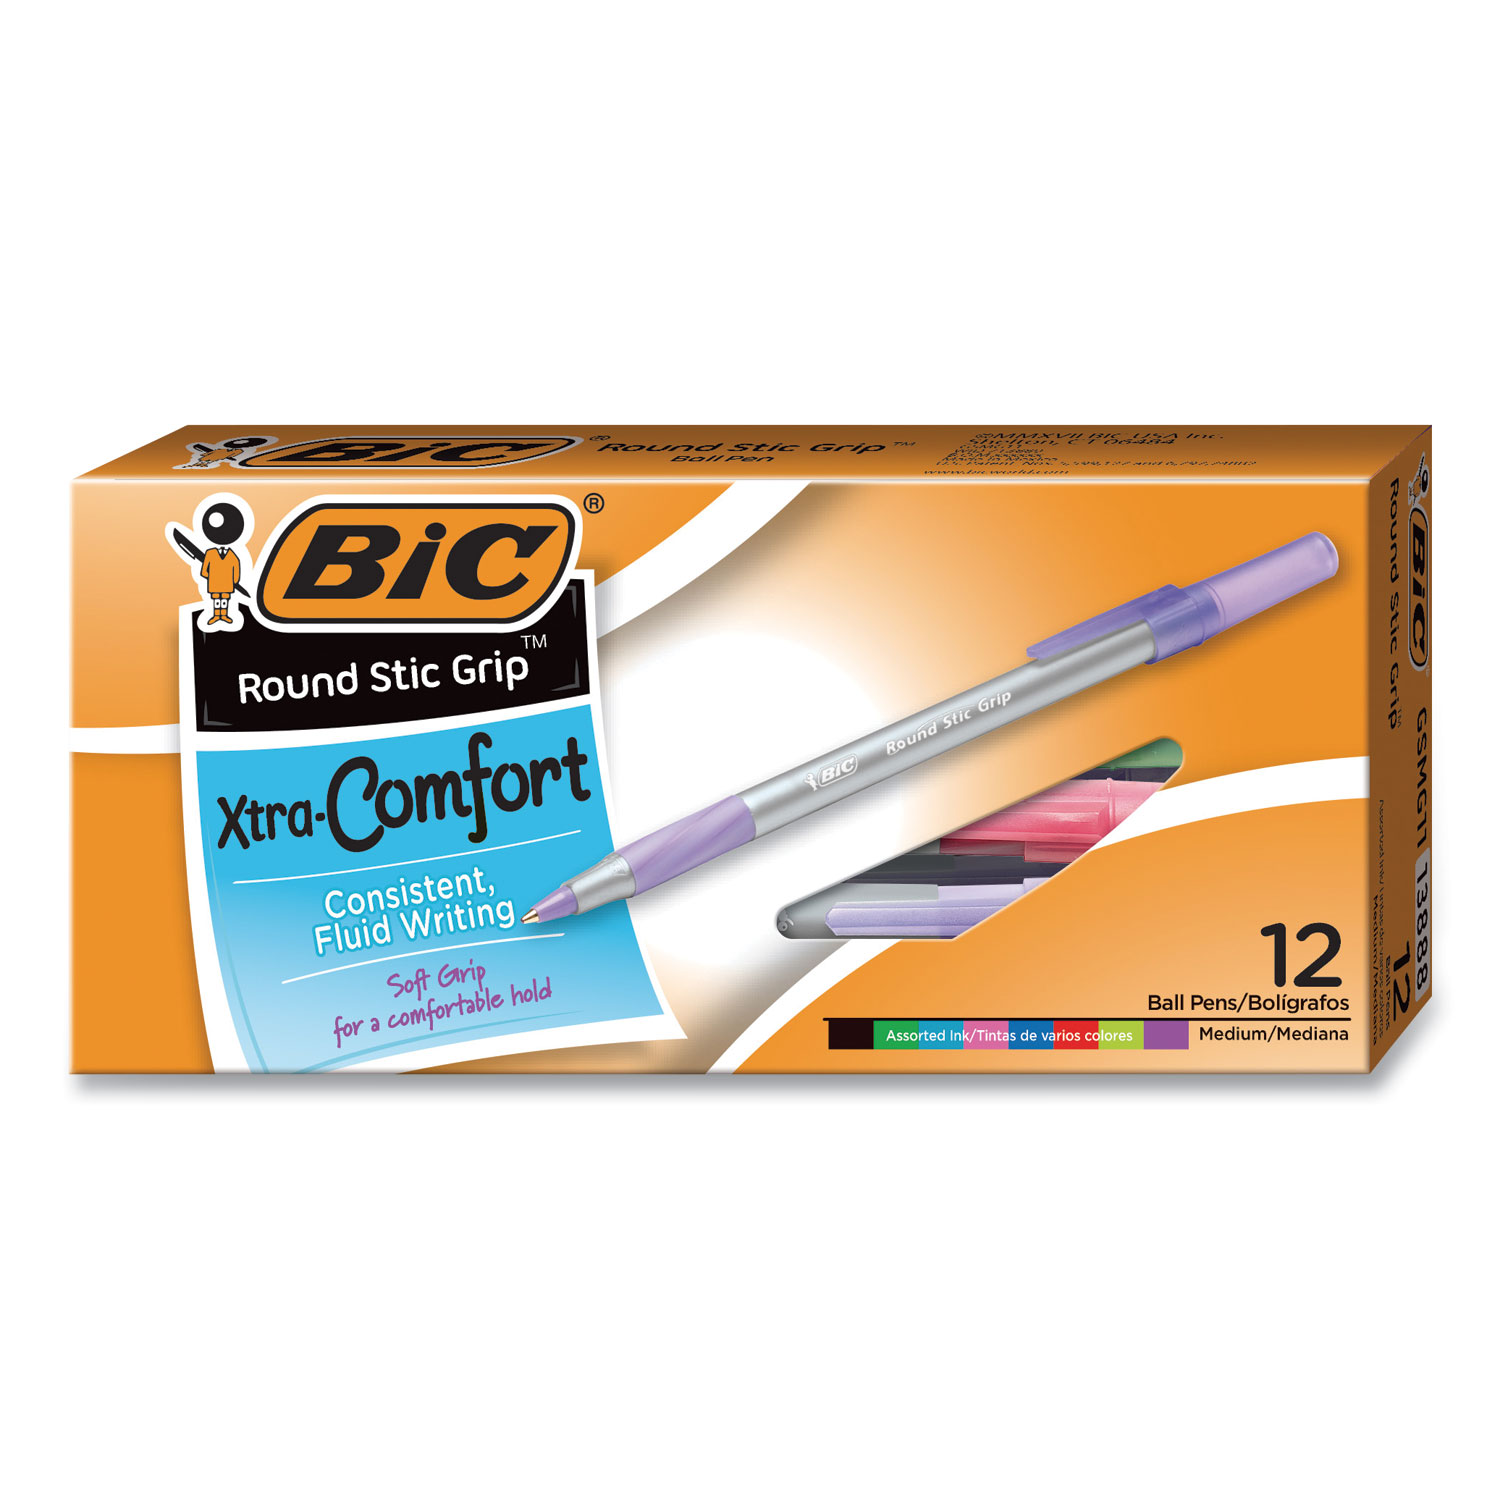  BIC WX8ST981-AST Round Stic Grip Xtra Comfort Stick Ballpoint Pen, 1mm, Assorted Fashion Inks, Translucent Barrels, Dozen (BIC24298914) 